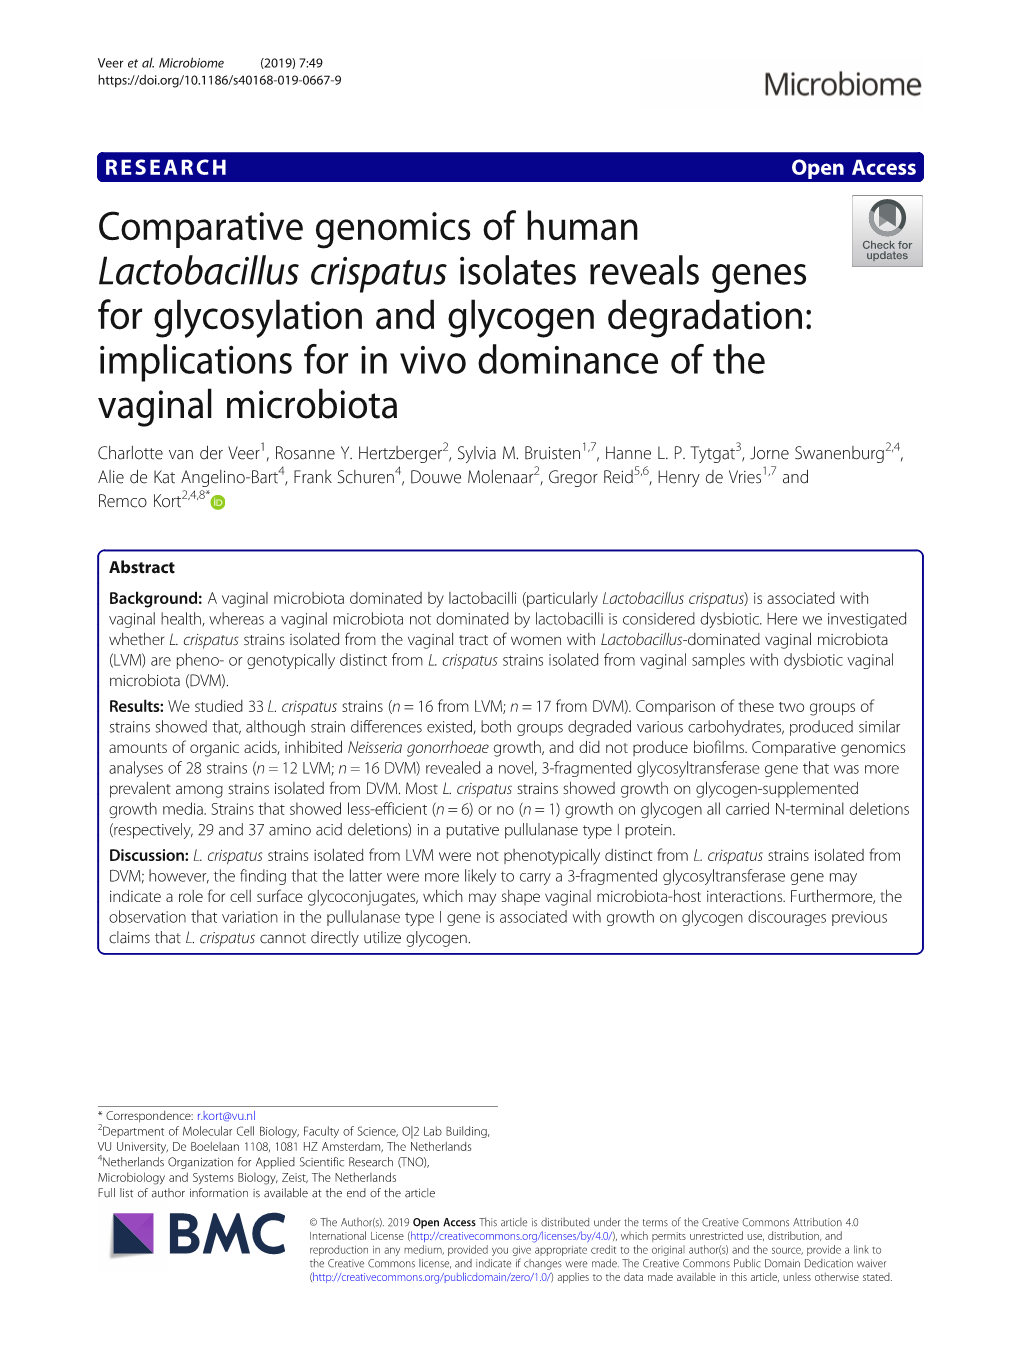 Comparative Genomics of Human Lactobacillus Crispatus Isolates